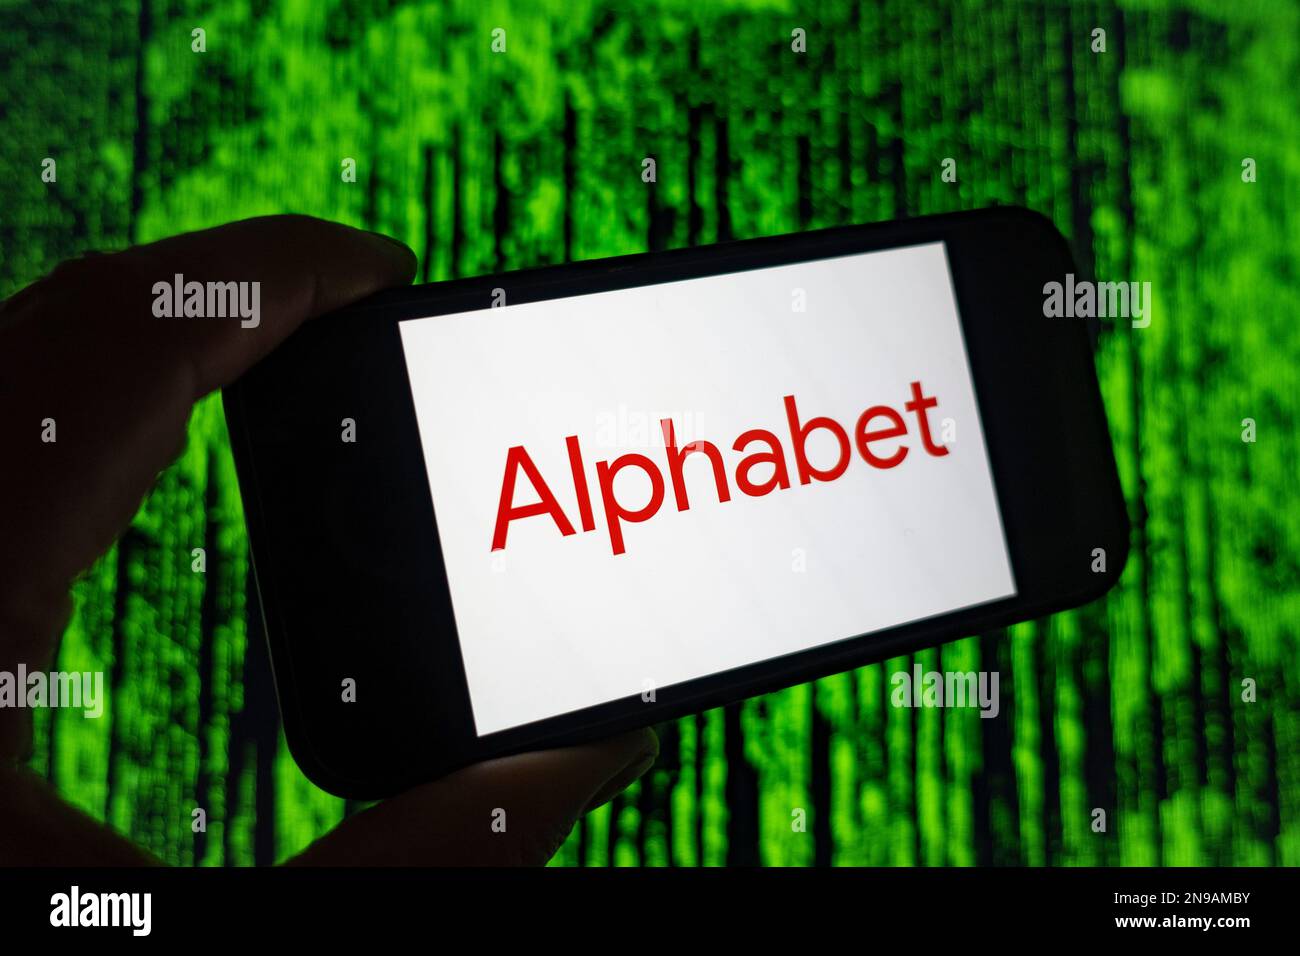 Digital composite image of Google Alphabet logo on phone scree. Stock Photo